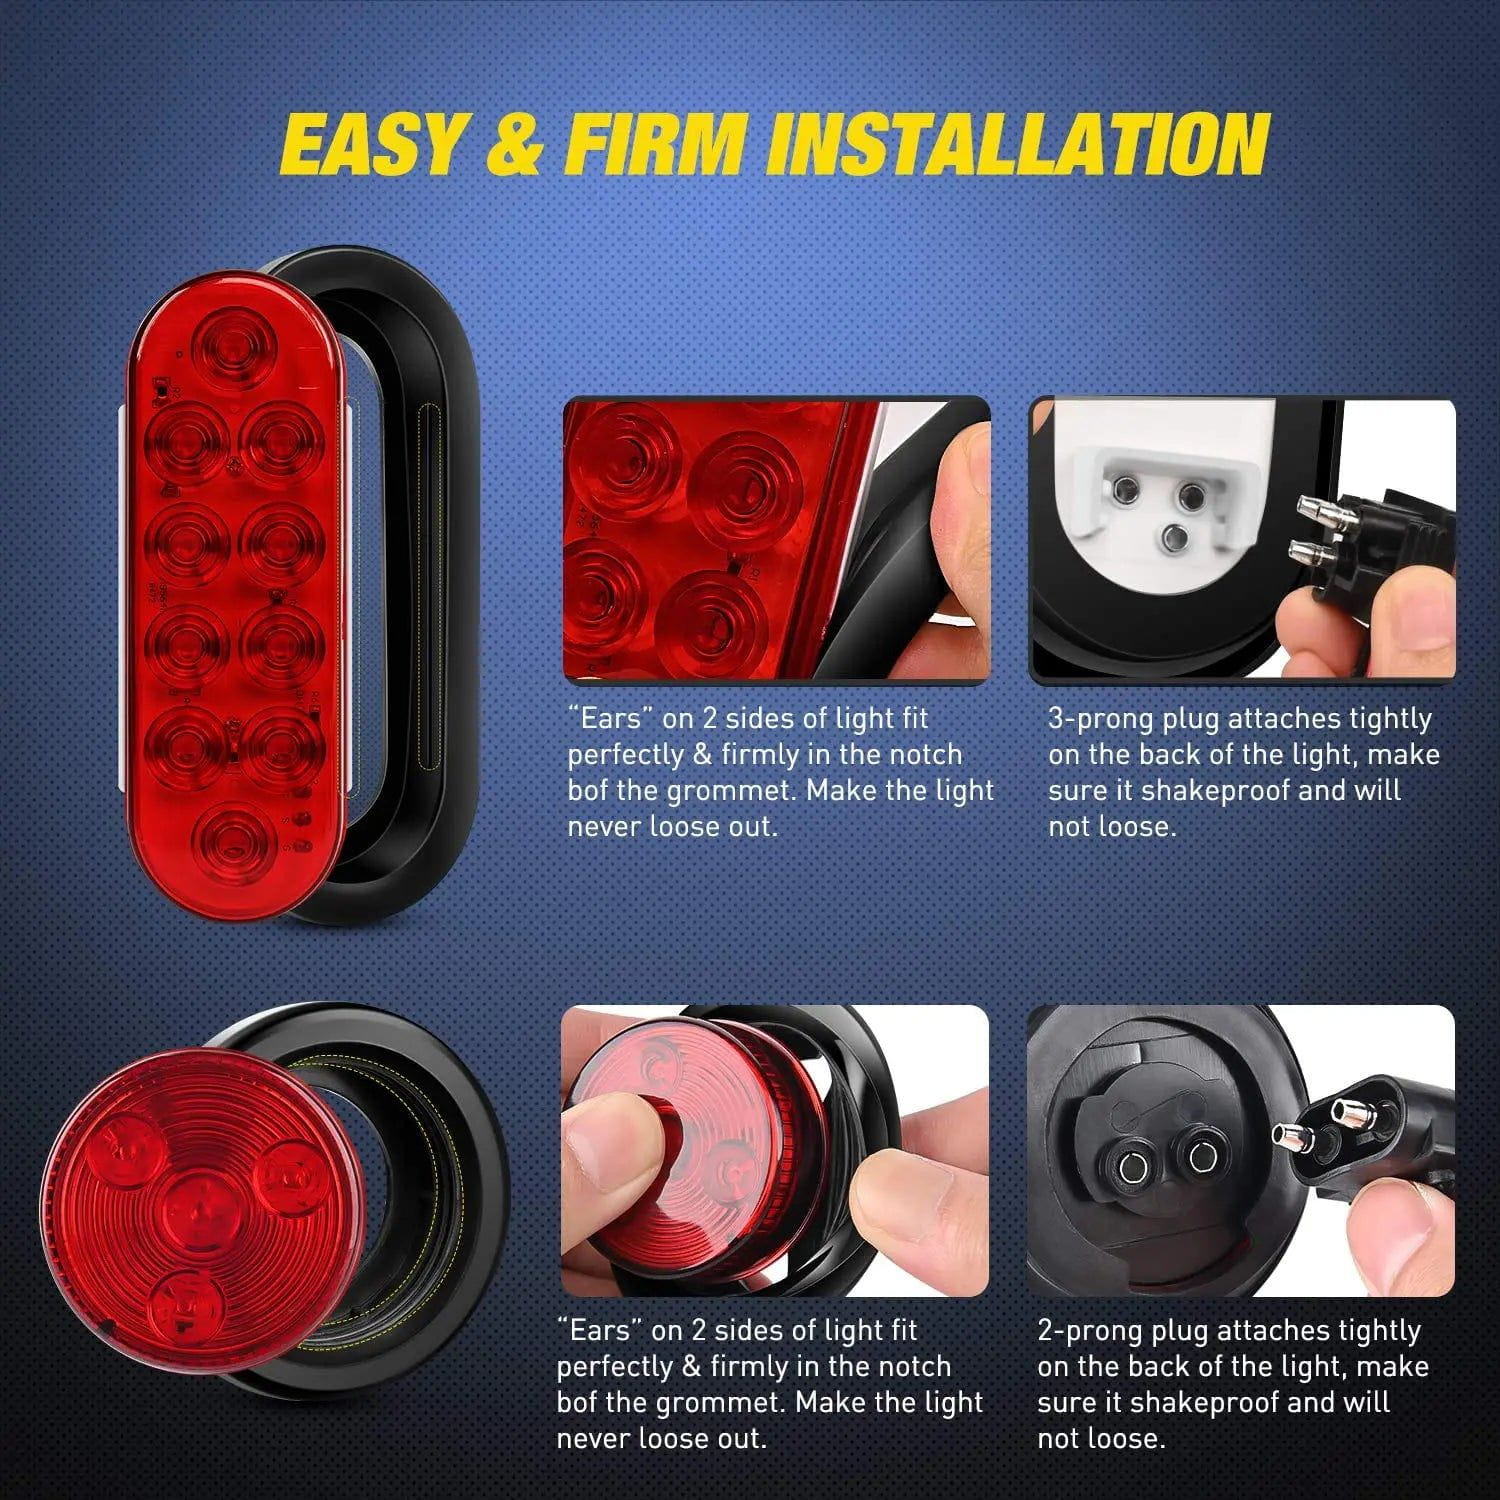 Trailer Light Trailer Light Box Kit | 6" Oval Red Tail Lights | 2" Round Red Side Marker Lights